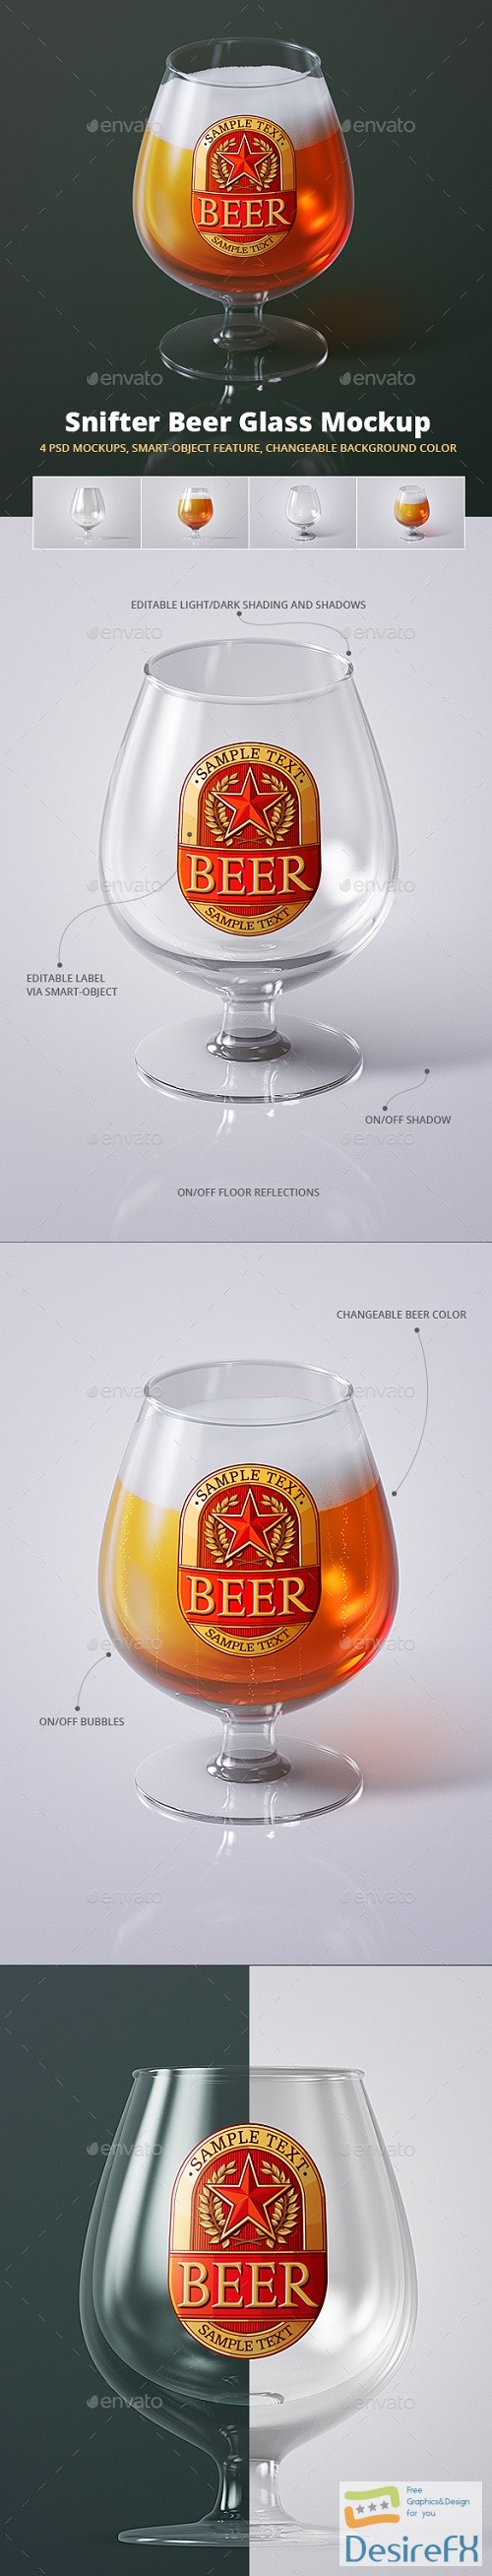 Download Desirefx.com | Download Beer Glass Mock-up - Snifter 21479691